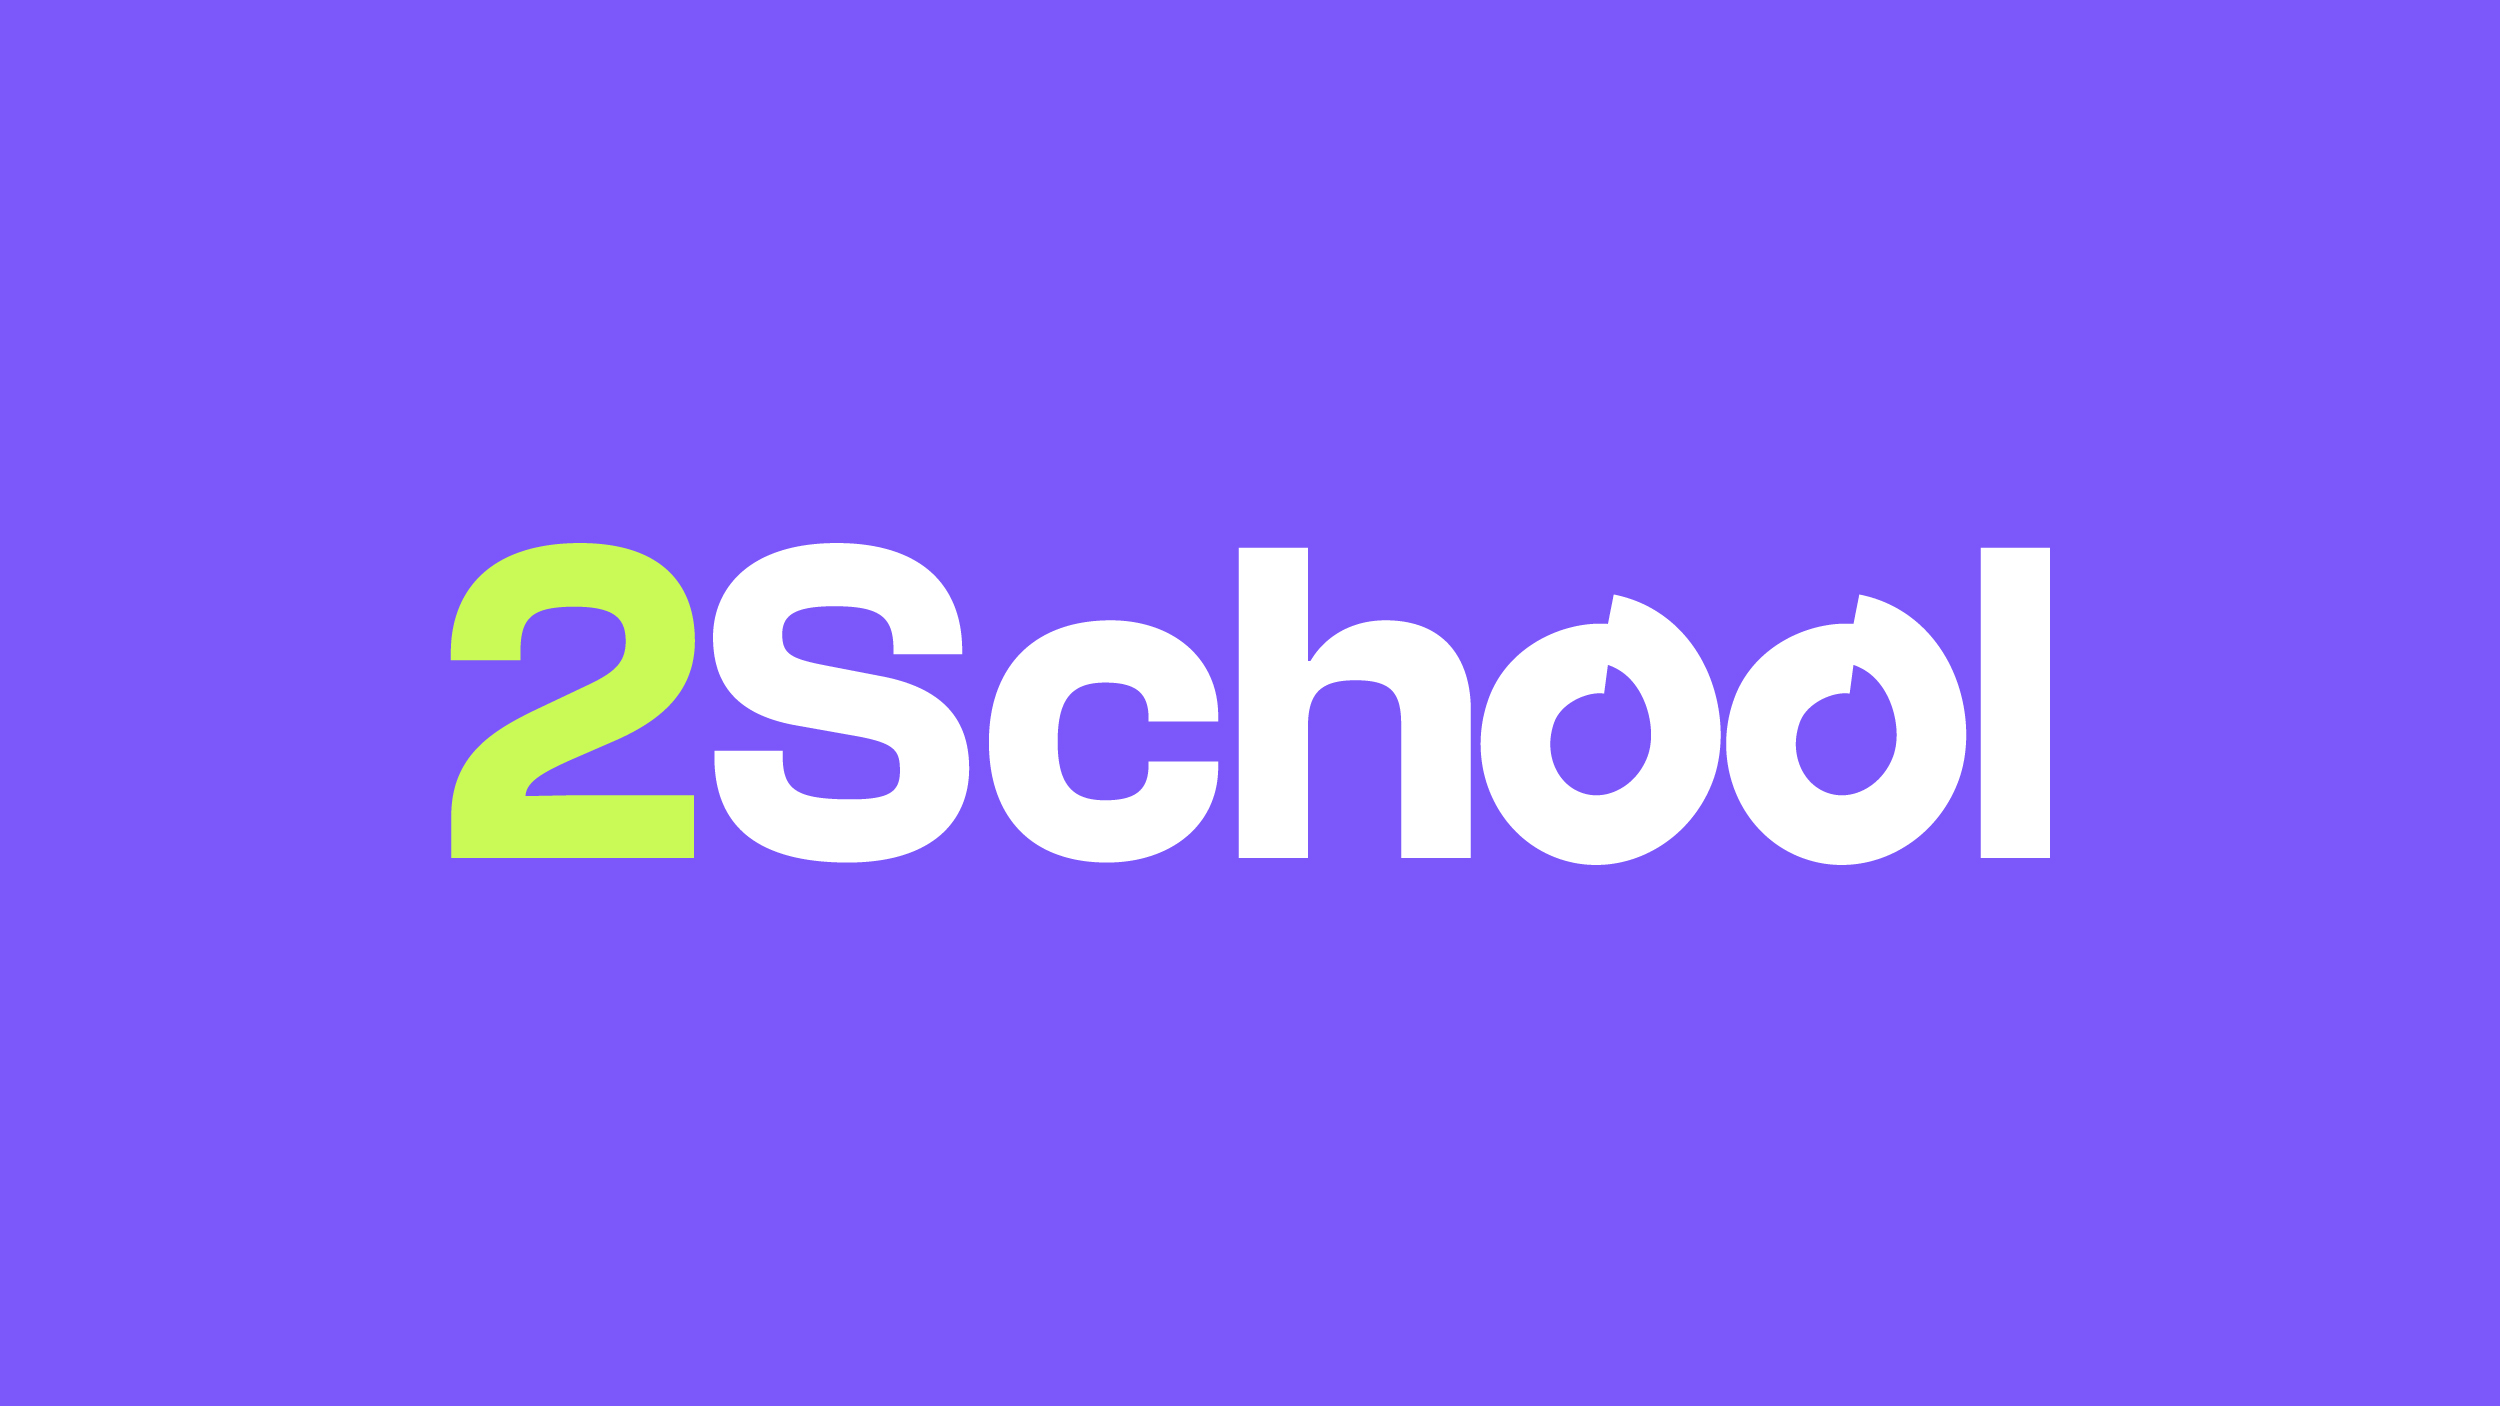 Brand Design for 2School